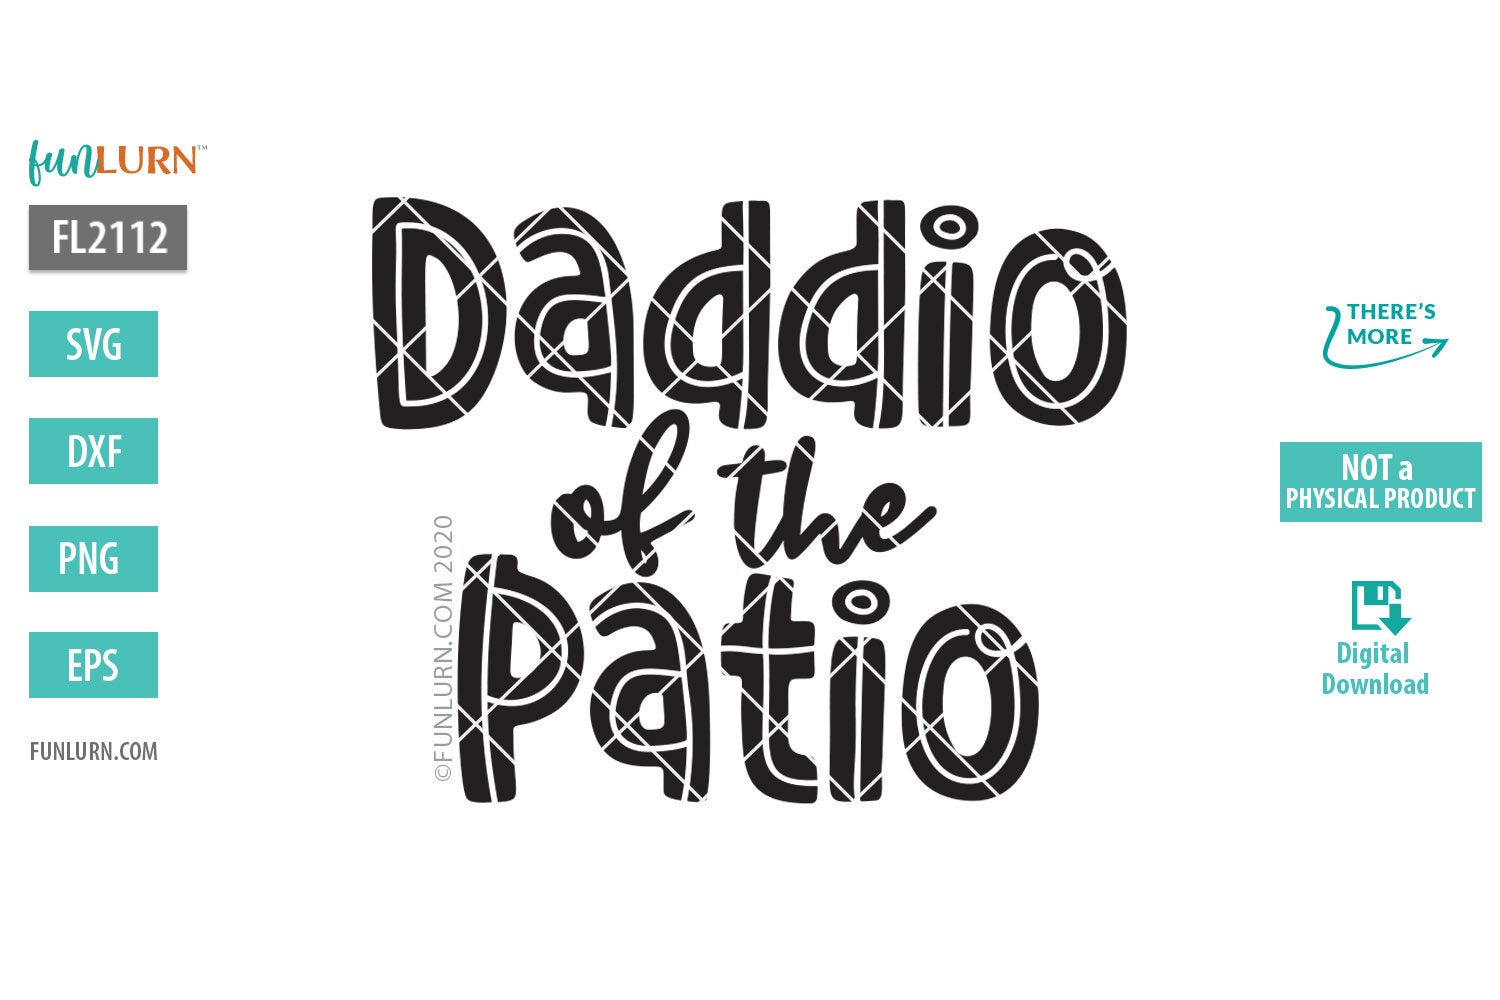 Daddio of the Patio - FunLurn